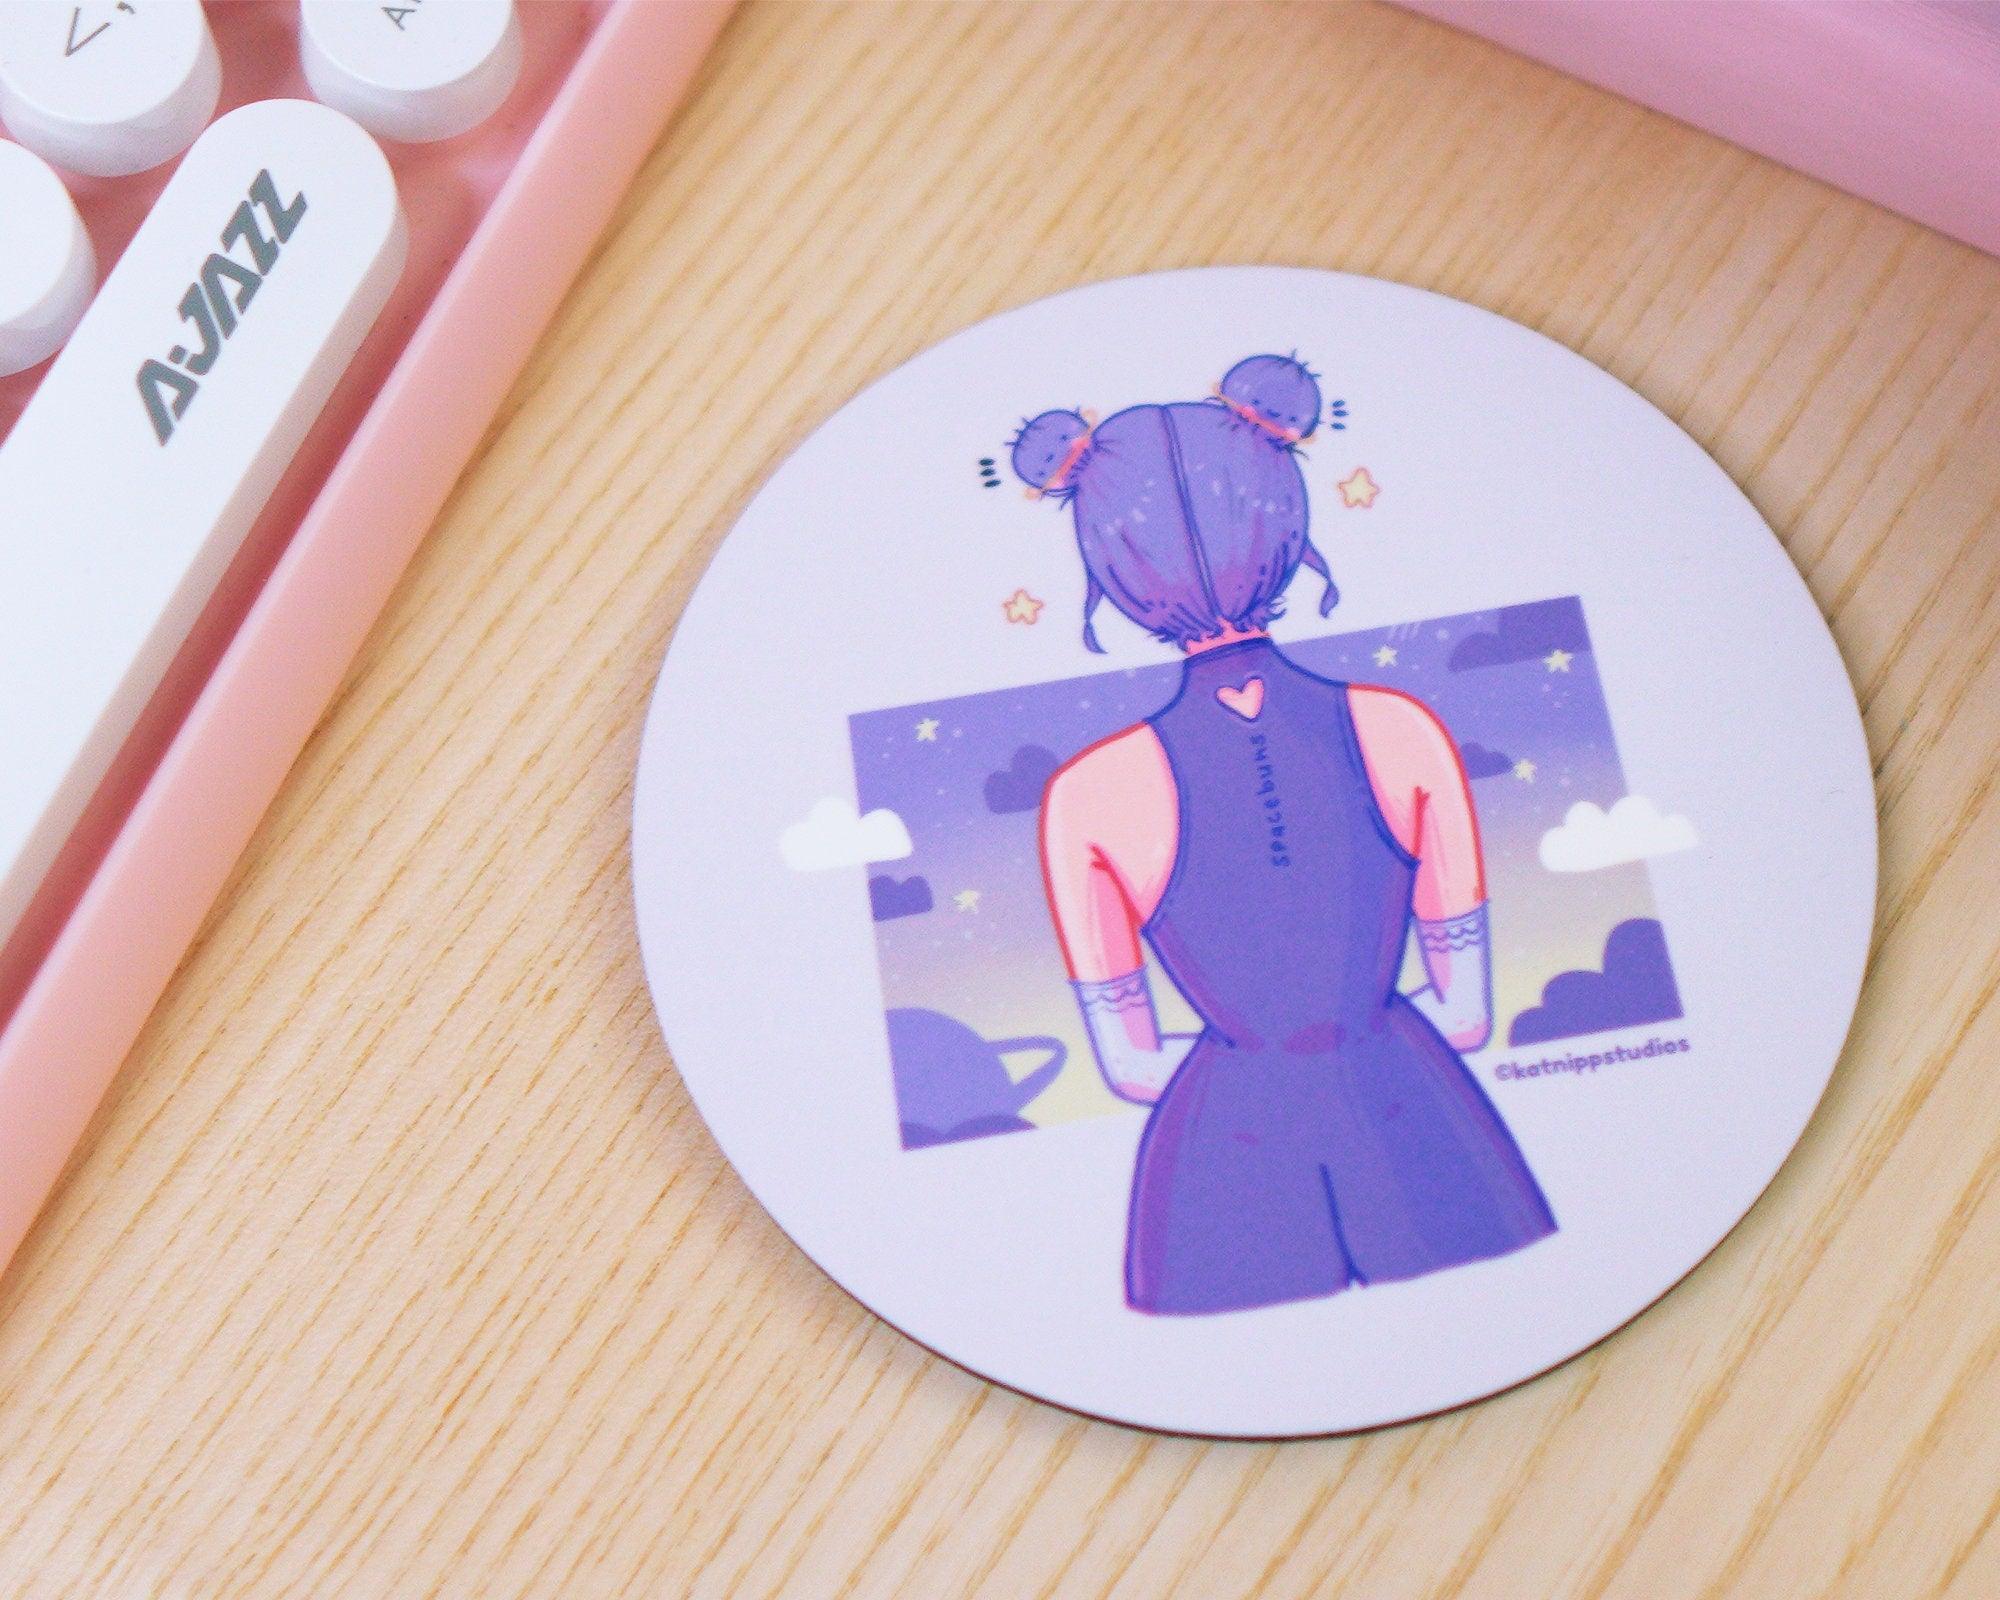 Space Buns Kawaii Anime Girl Desk Accessory Drinks Coaster - Katnipp Illustrations